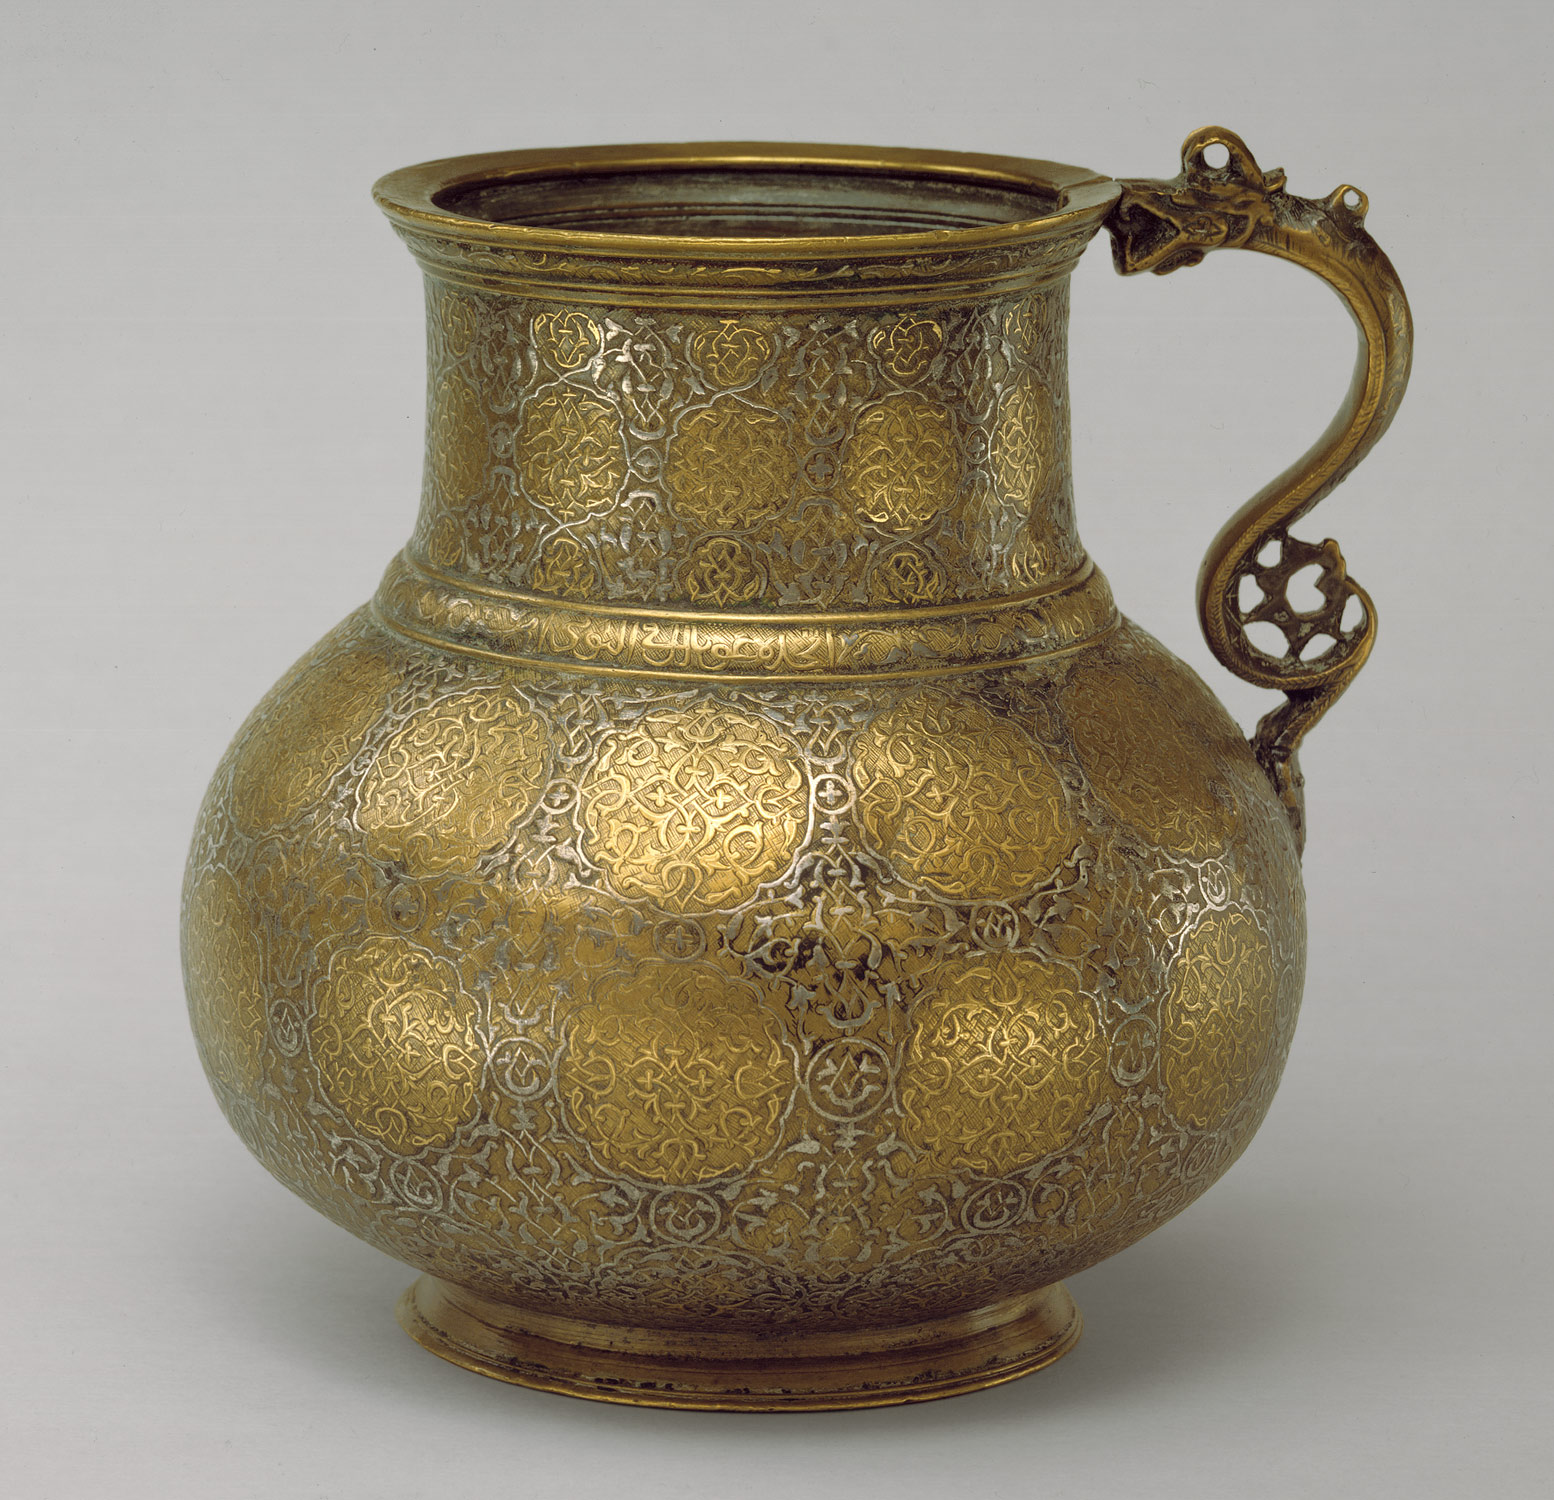 Dragon-handled jug with inscription